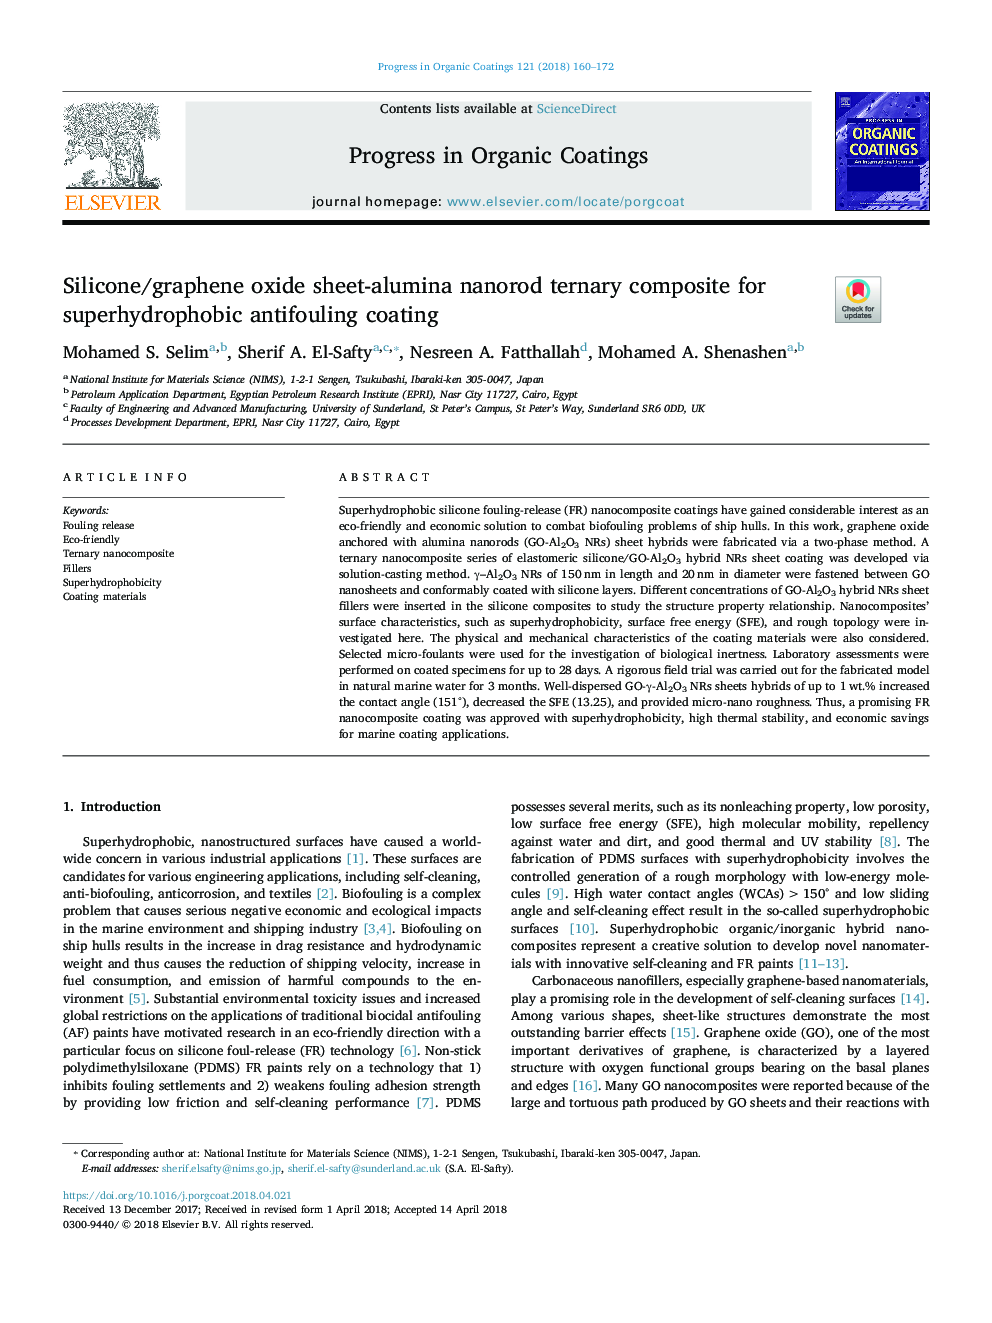 Silicone/graphene oxide sheet-alumina nanorod ternary composite for superhydrophobic antifouling coating